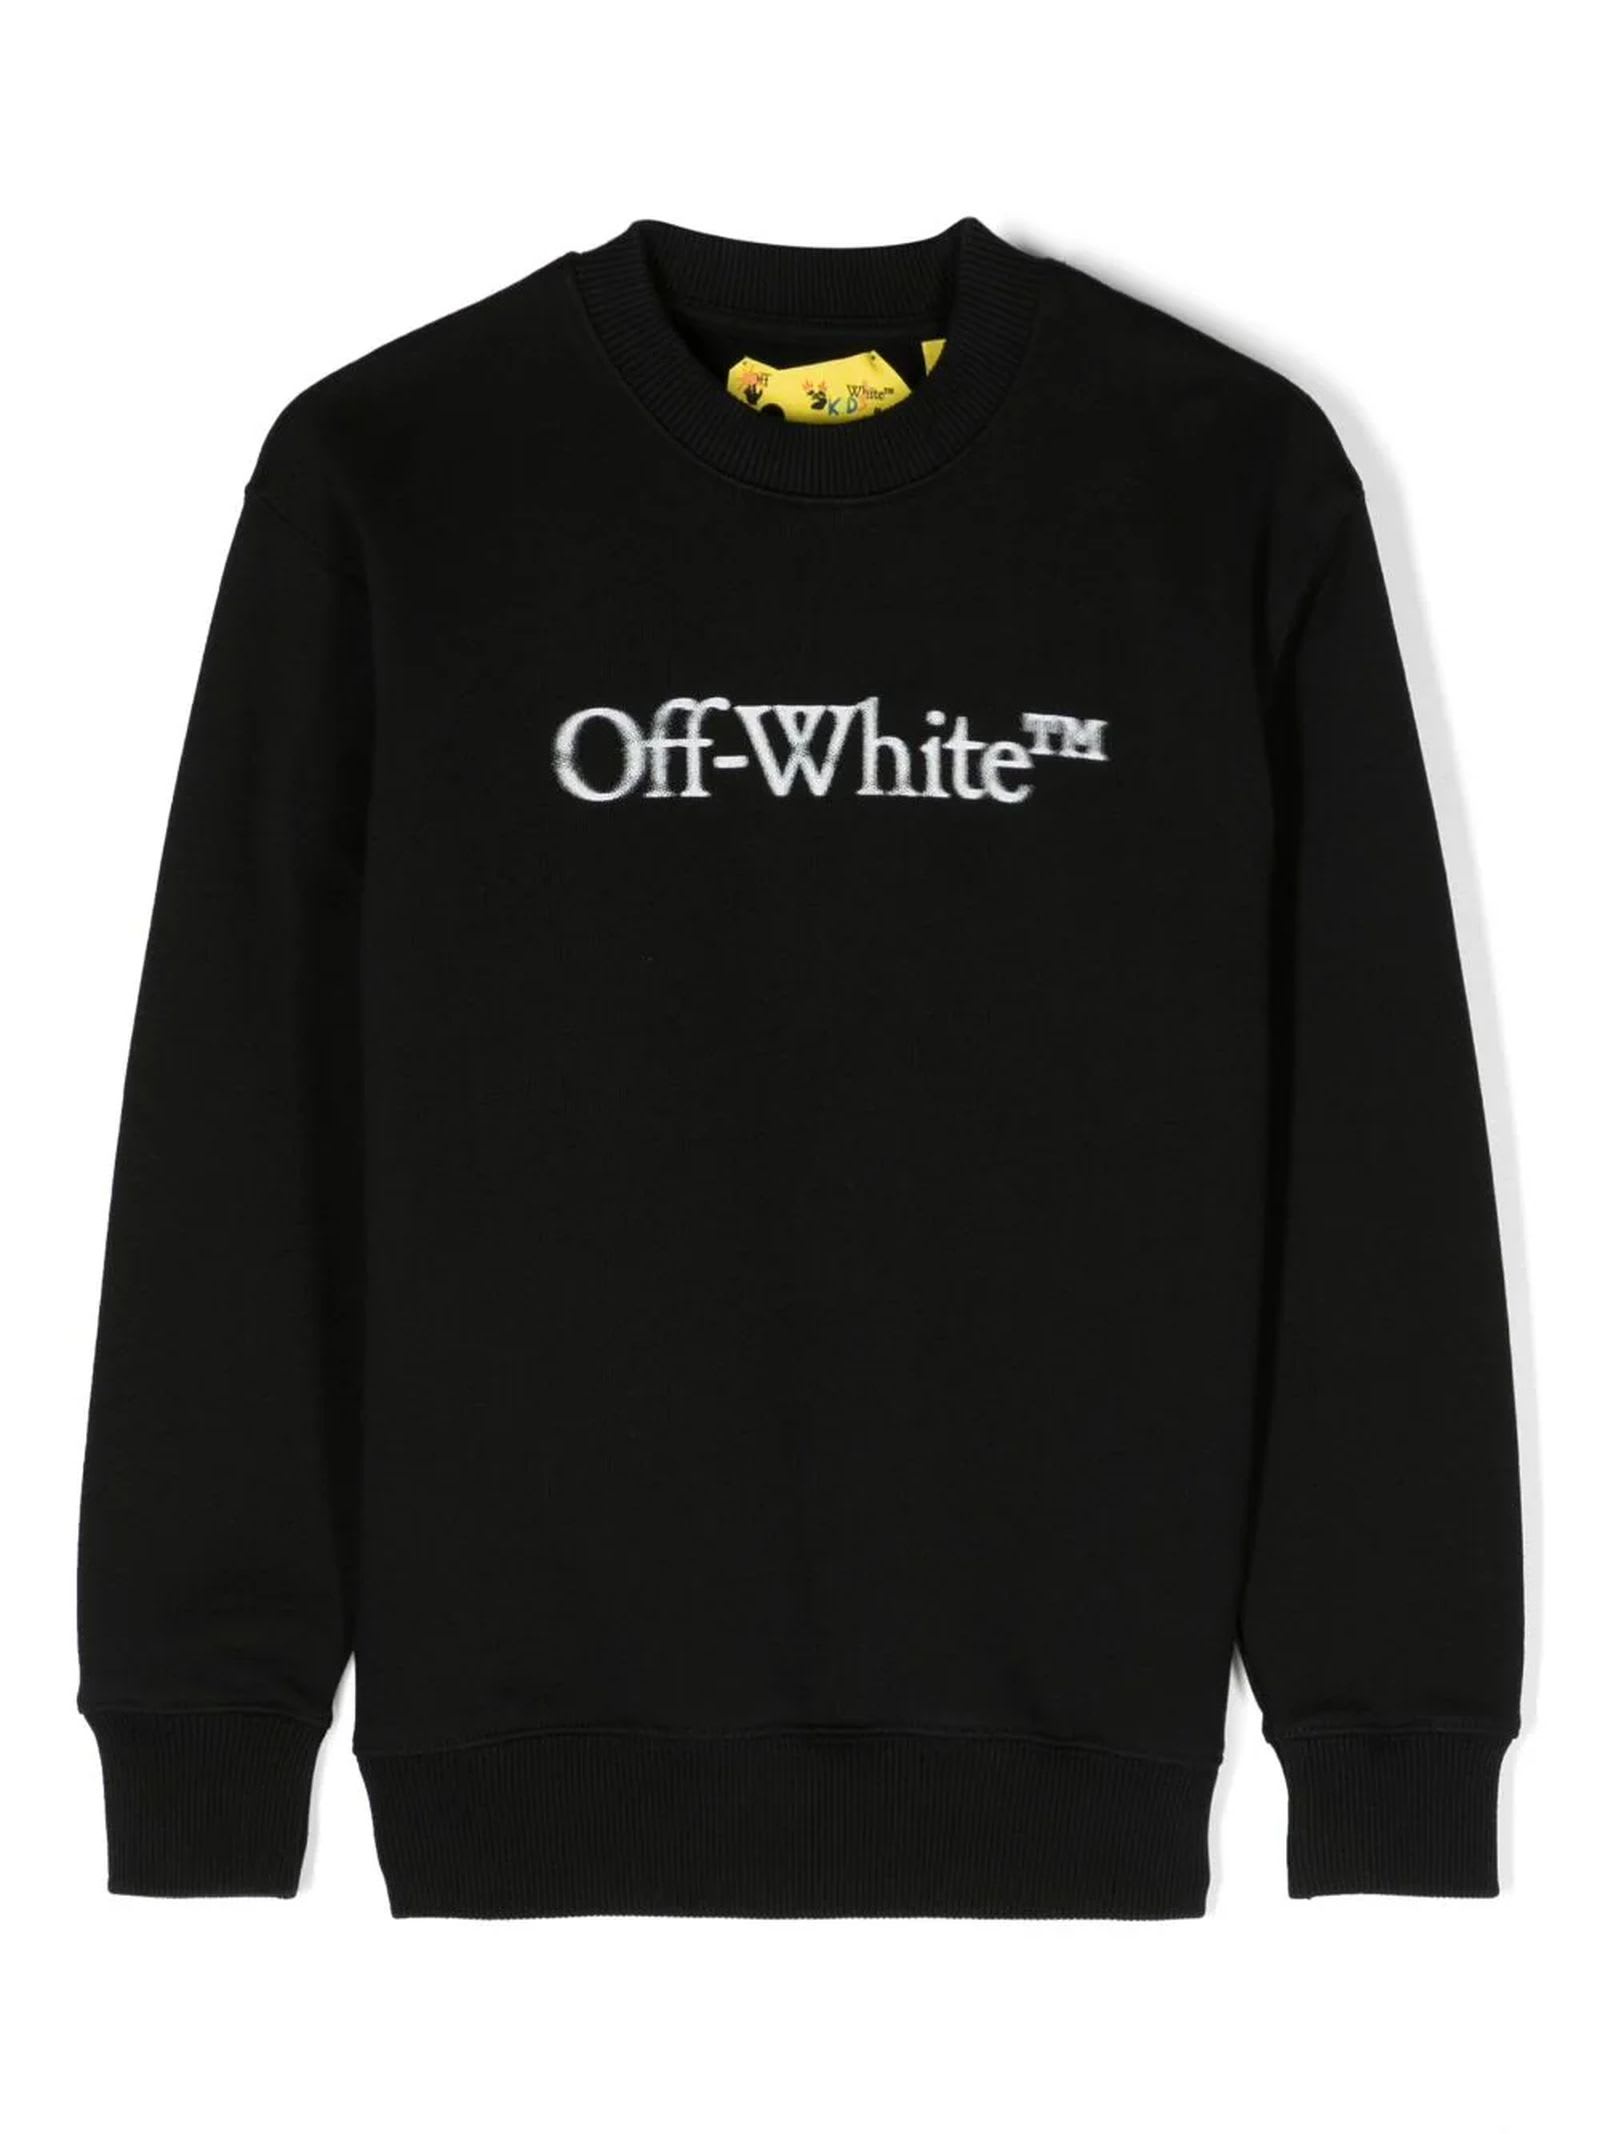 OFF-WHITE BLACK COTTON SWEATSHIRT